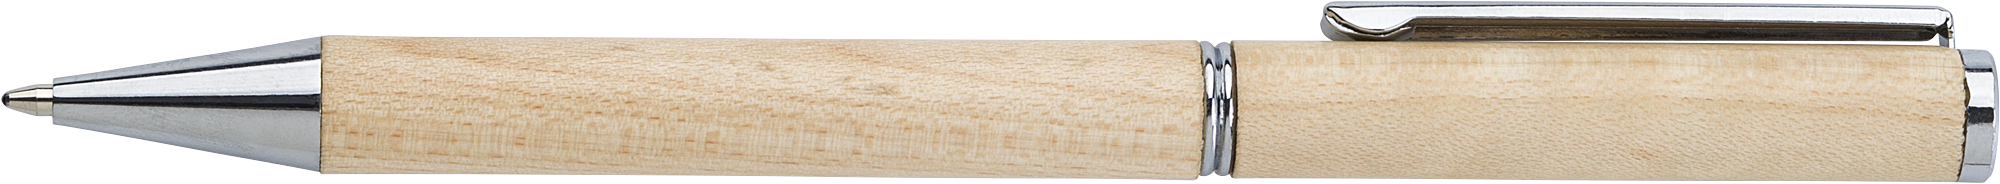 Maple wooden ballpen 864974_011 (Brown)